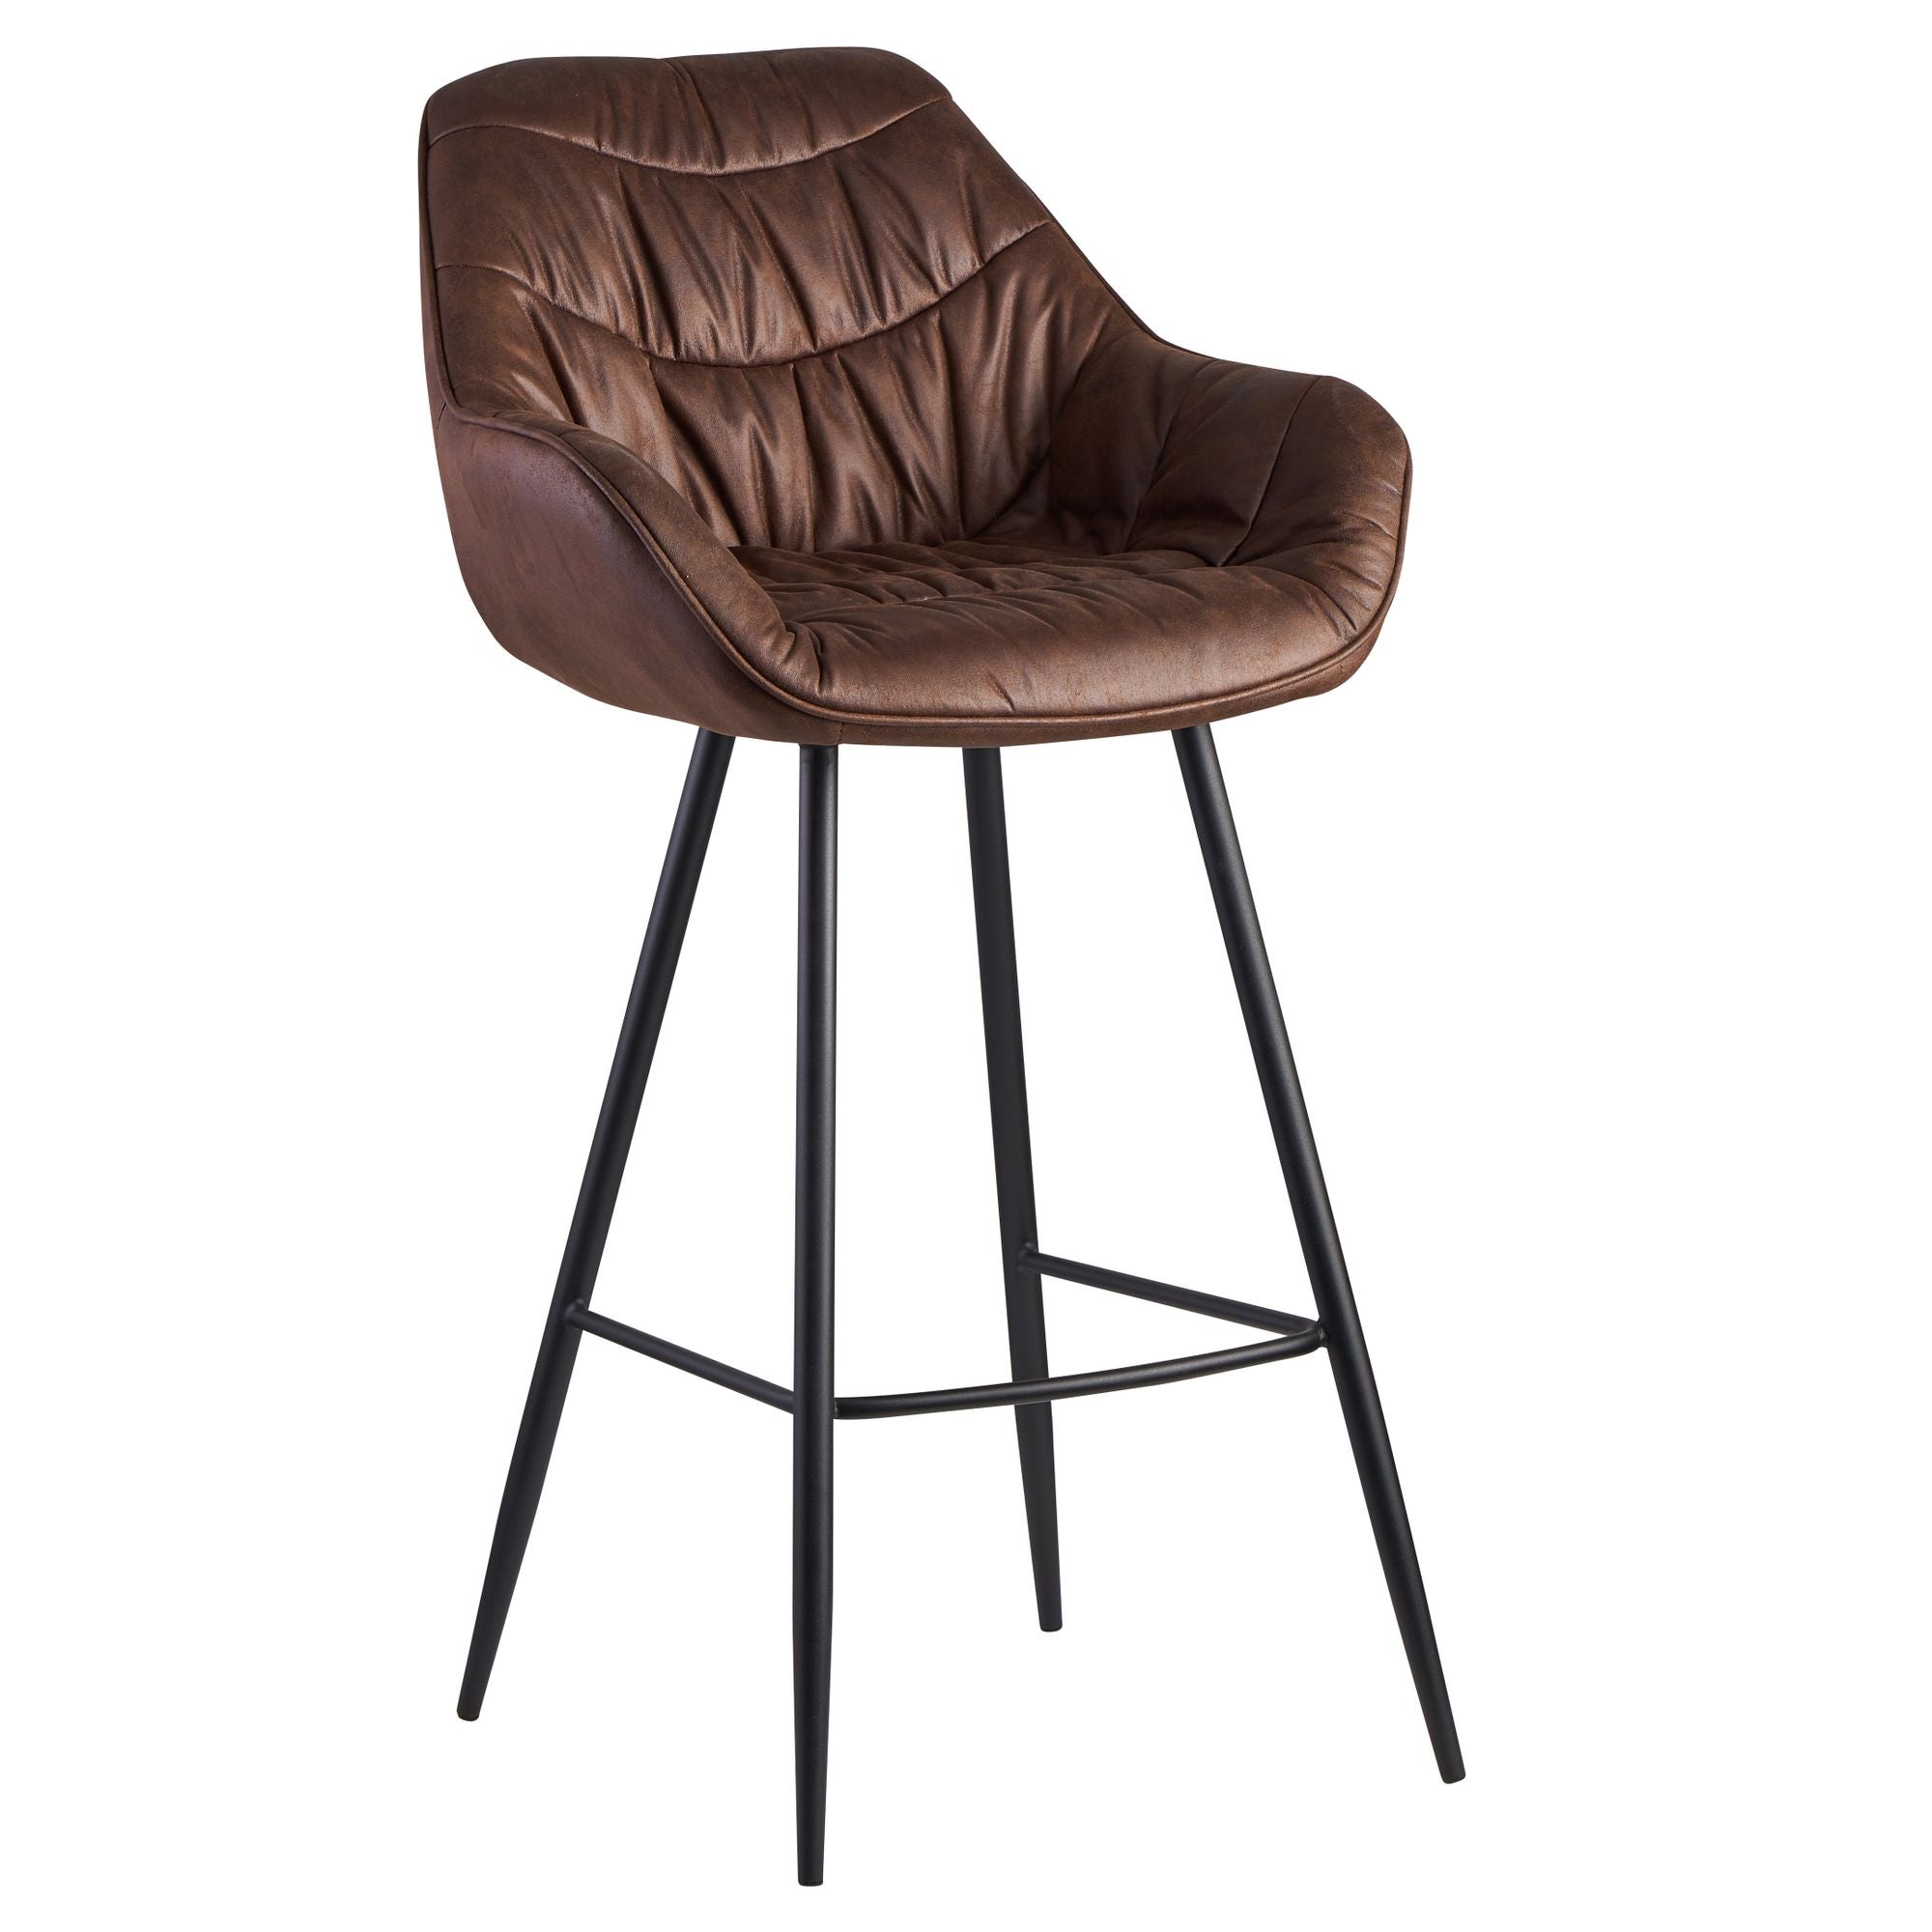 Se Barstol / bistrostol i trendy skandinavisk stil, ruskind stof, med ryglæn, 56x108x59 cm, brun hos Lammeuld.dk